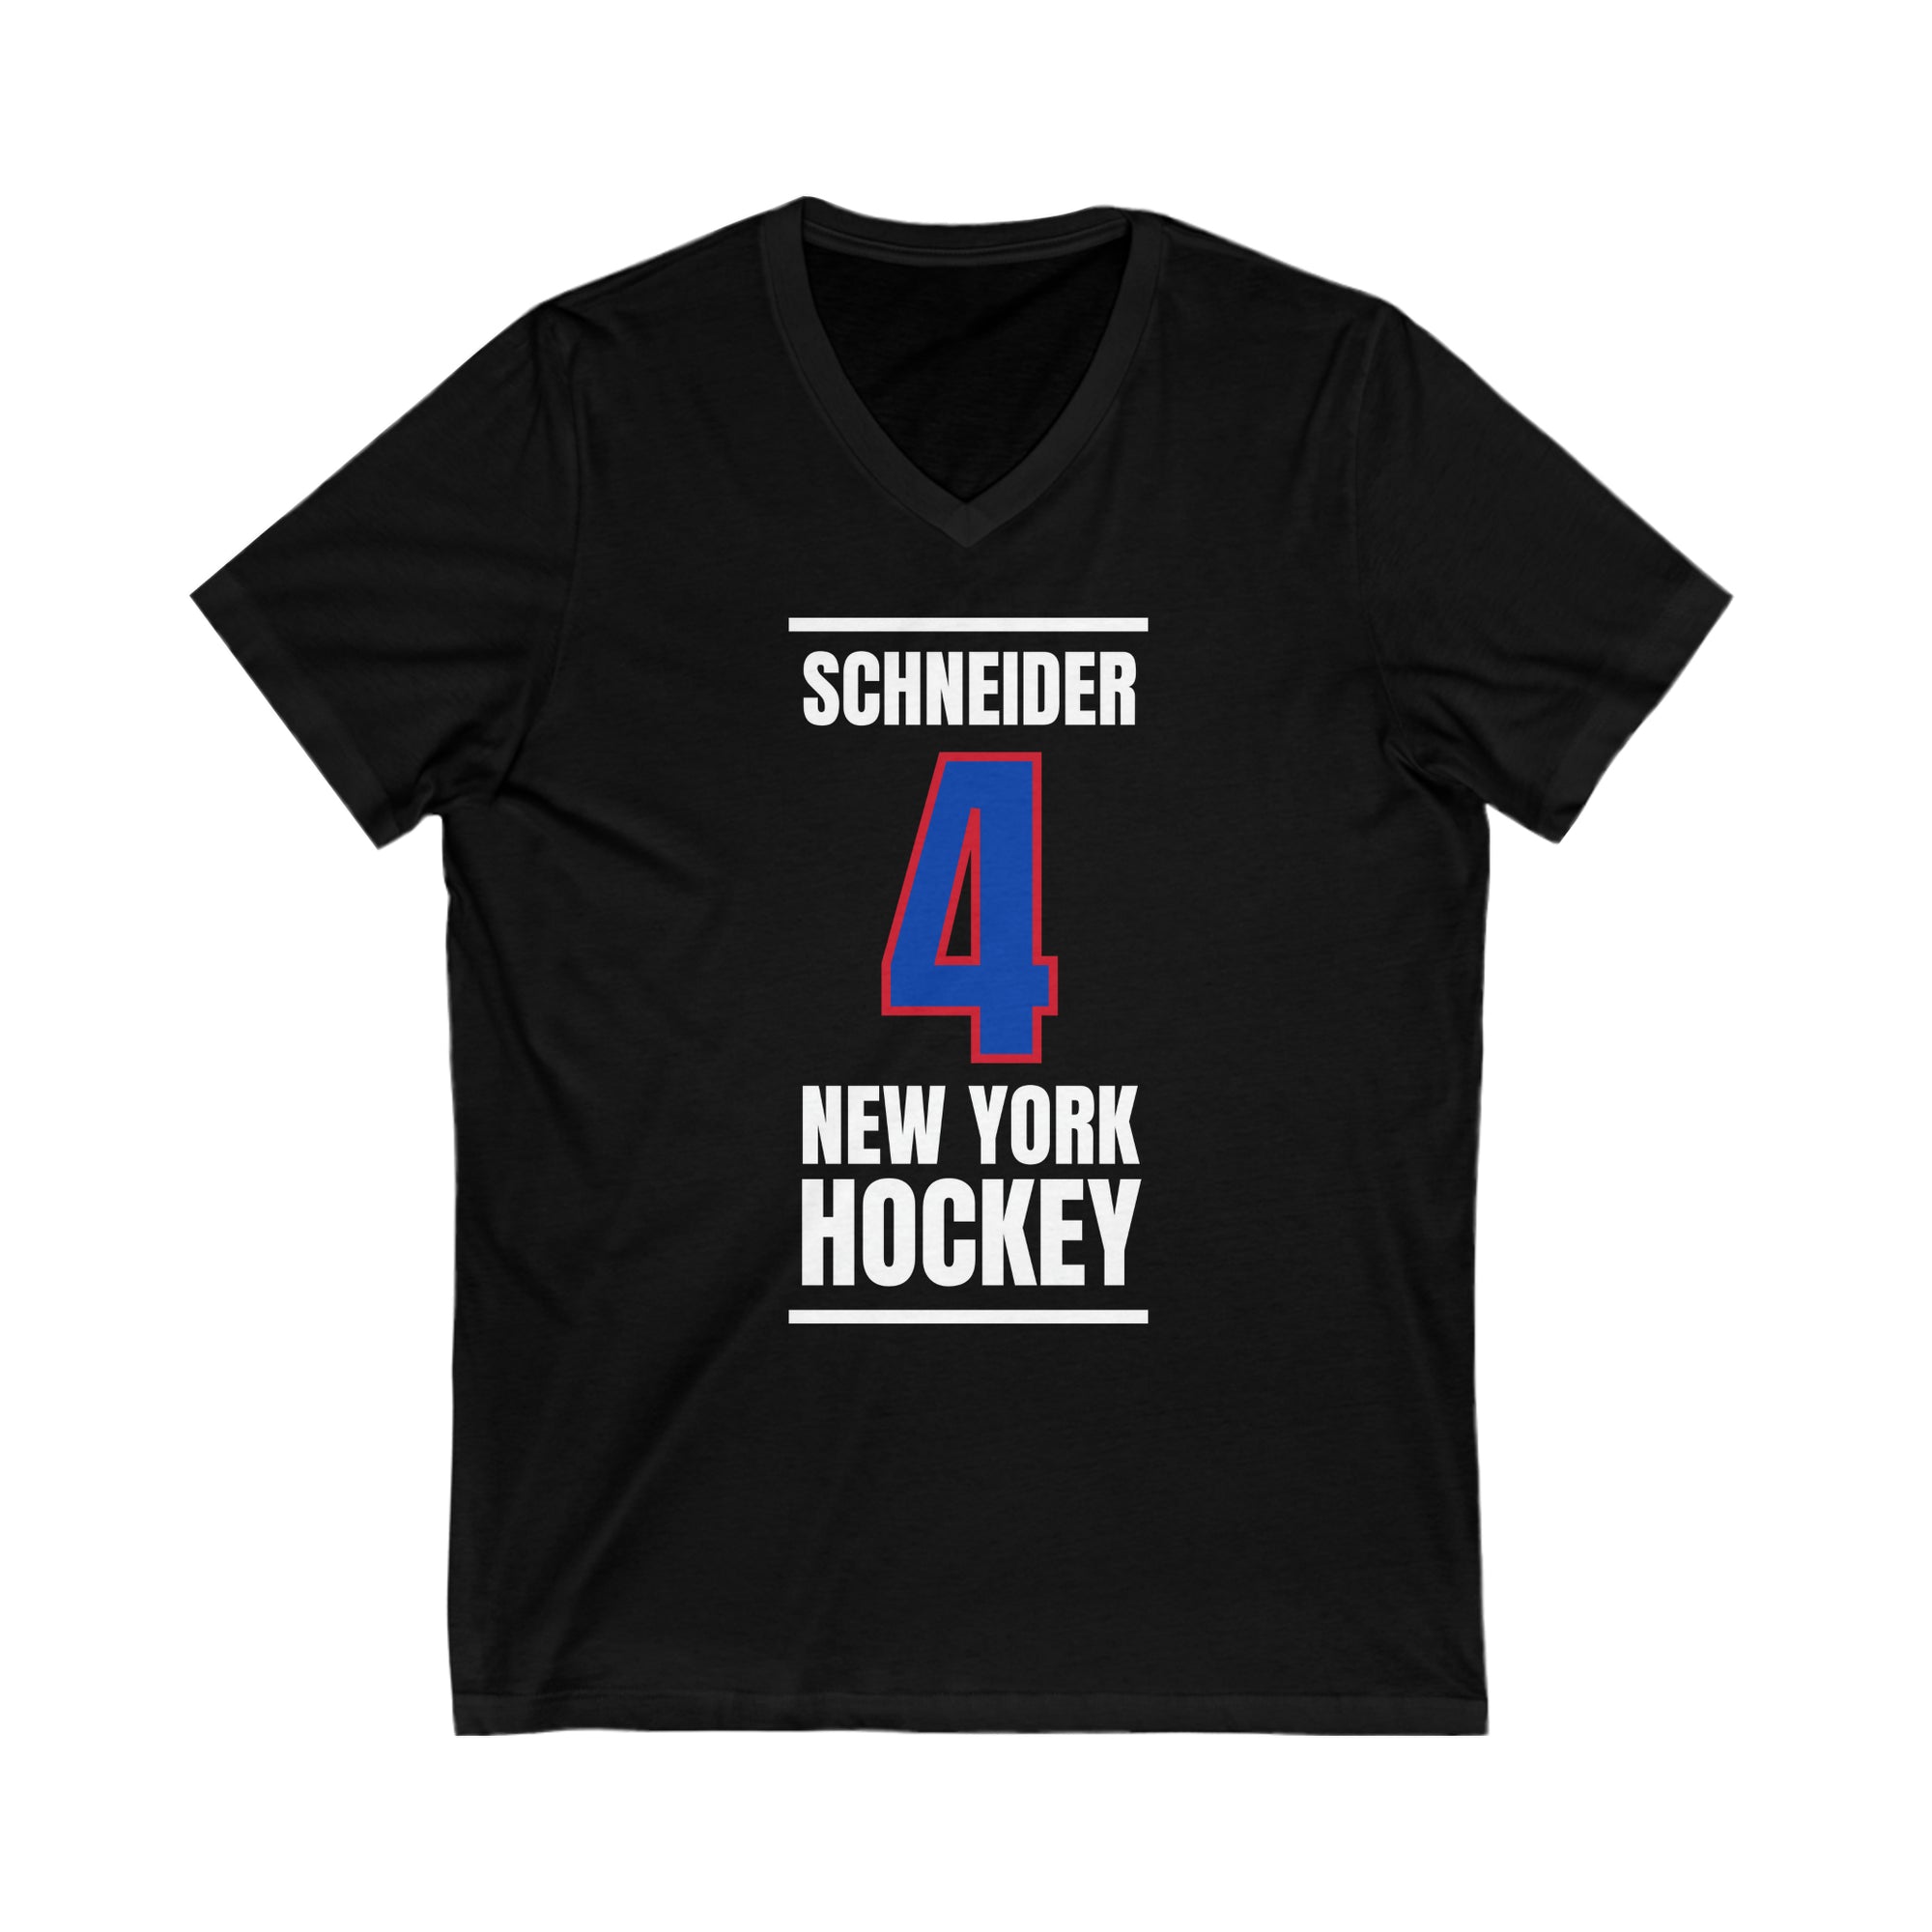 Schneider 4 New York Hockey Royal Blue Vertical Design Unisex V-Neck Tee